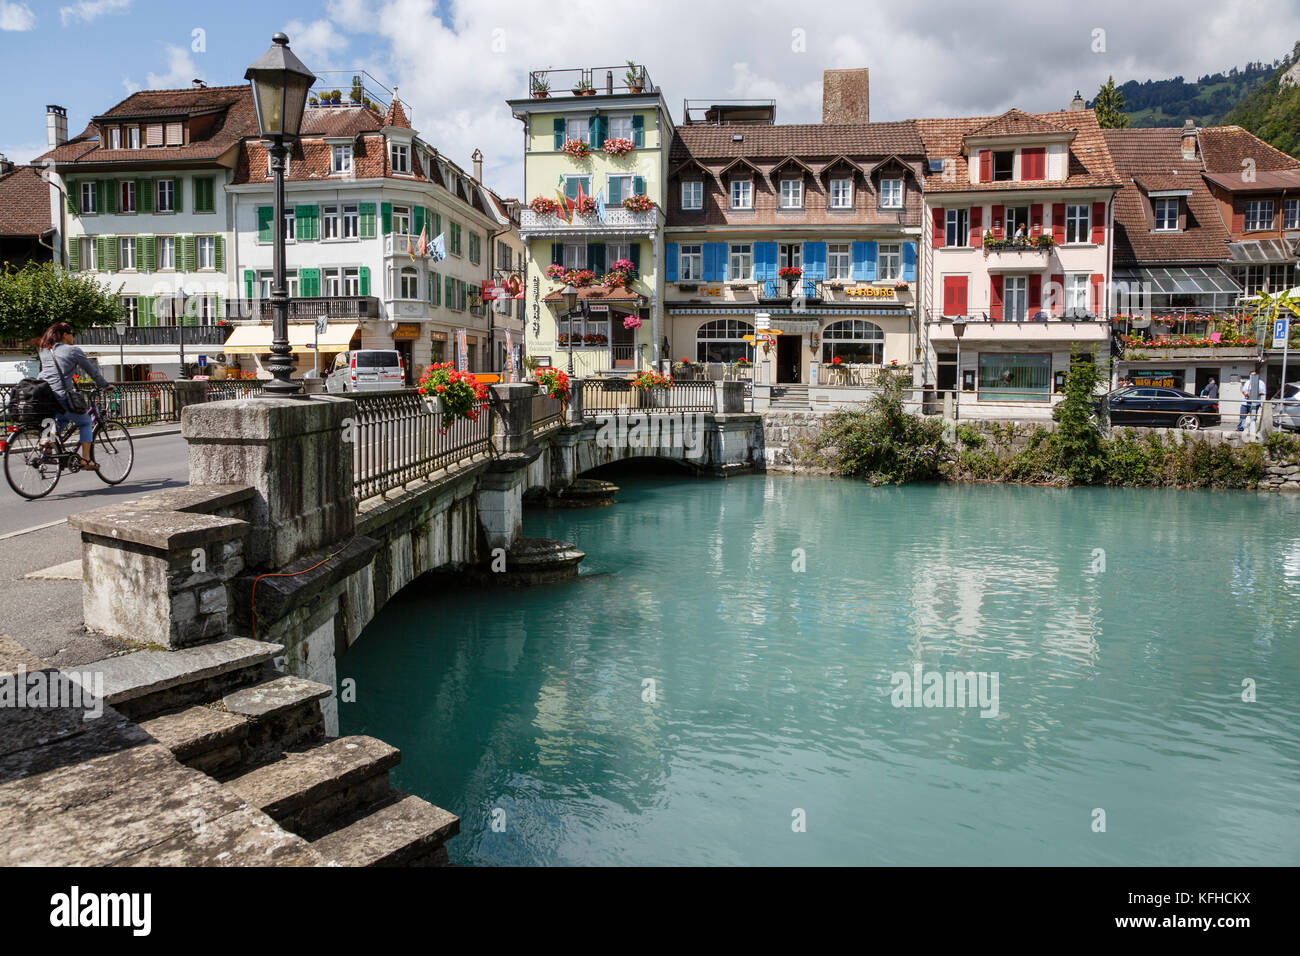 The old town from the bridge over the River Aare, Unterseen, Interlaken, Switzerland Stock Photo